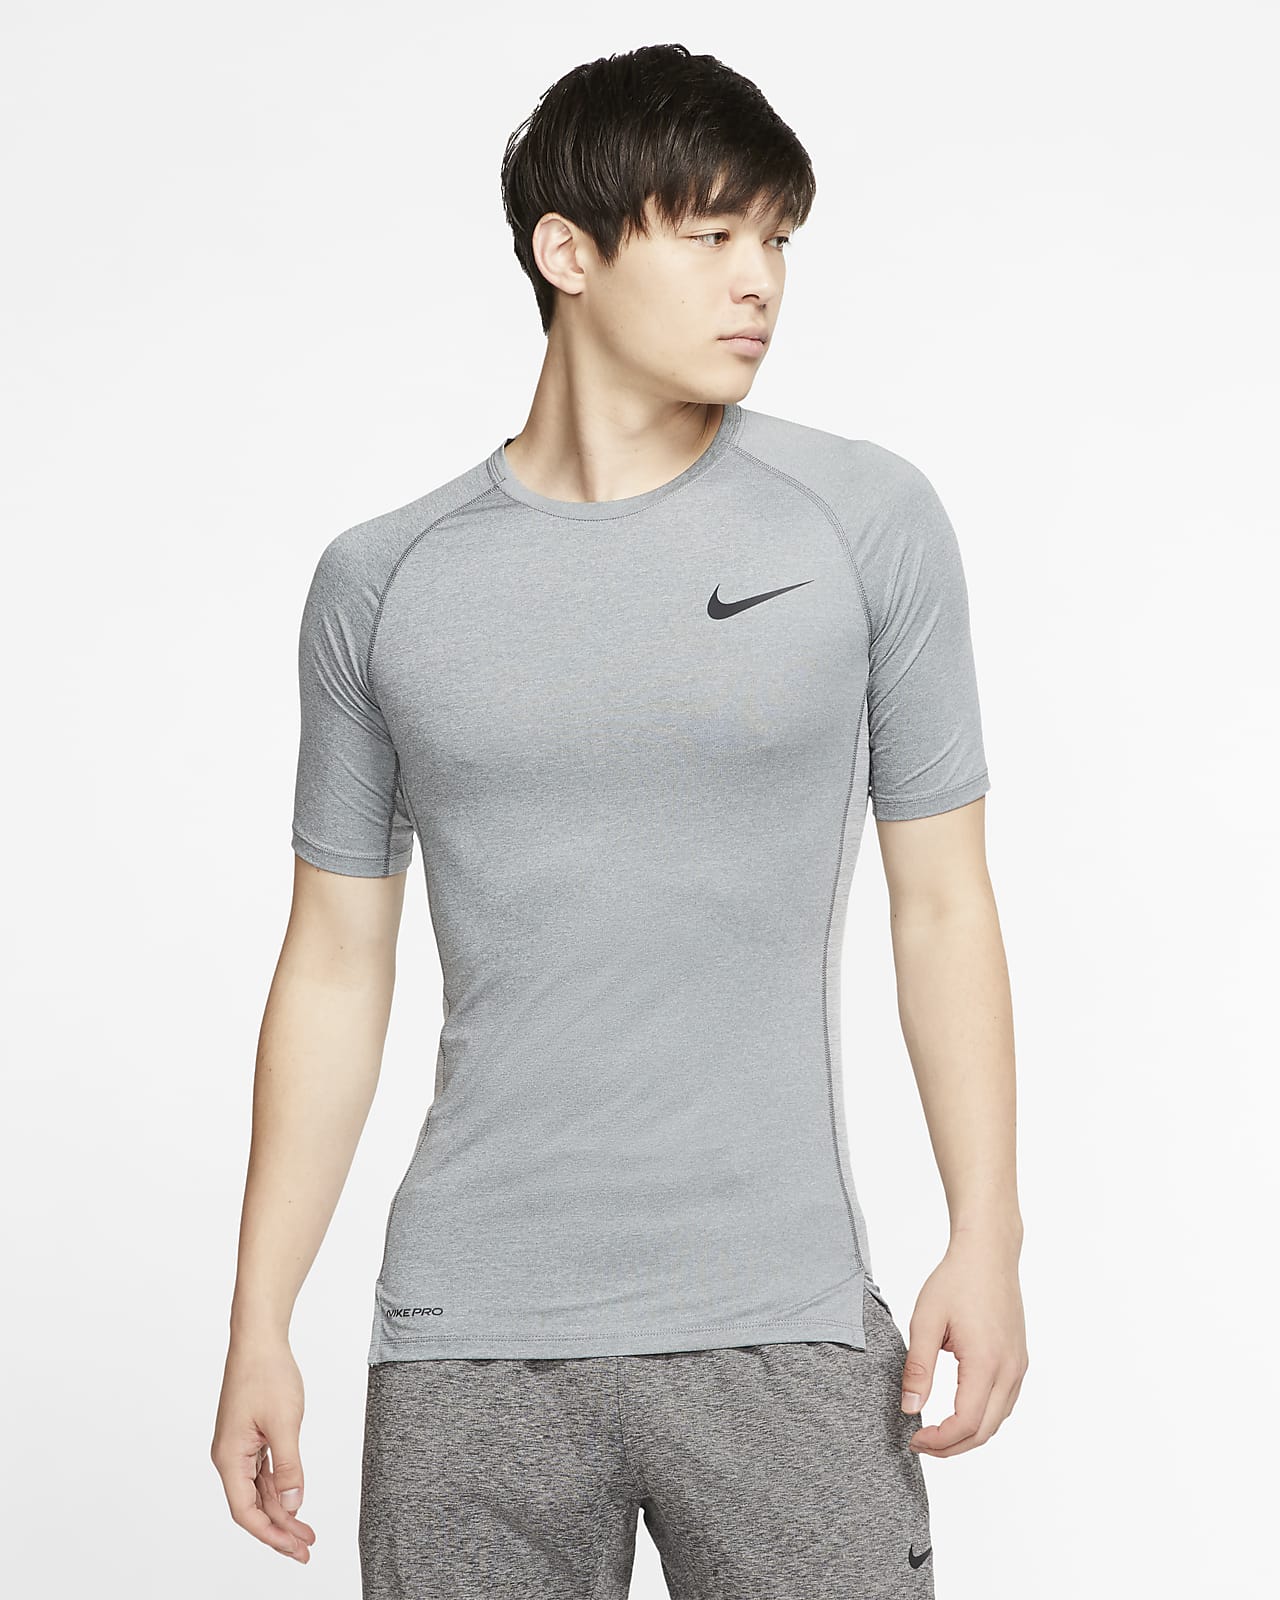 Nike Pro Men's Tight-Fit Short-Sleeve Top. Nike SA